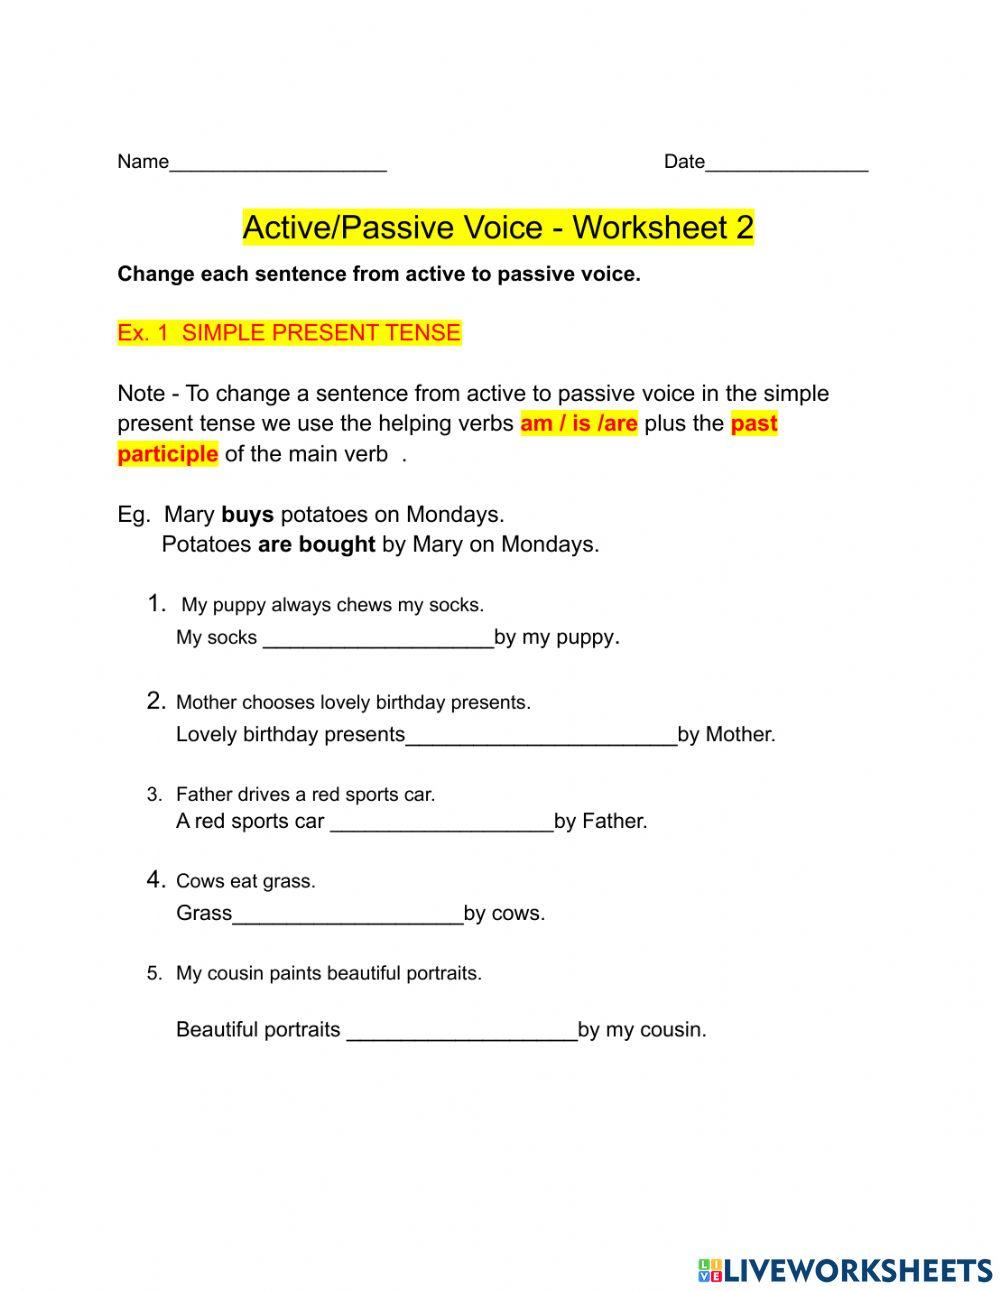 Active-Passive Voice - Worksheet 2